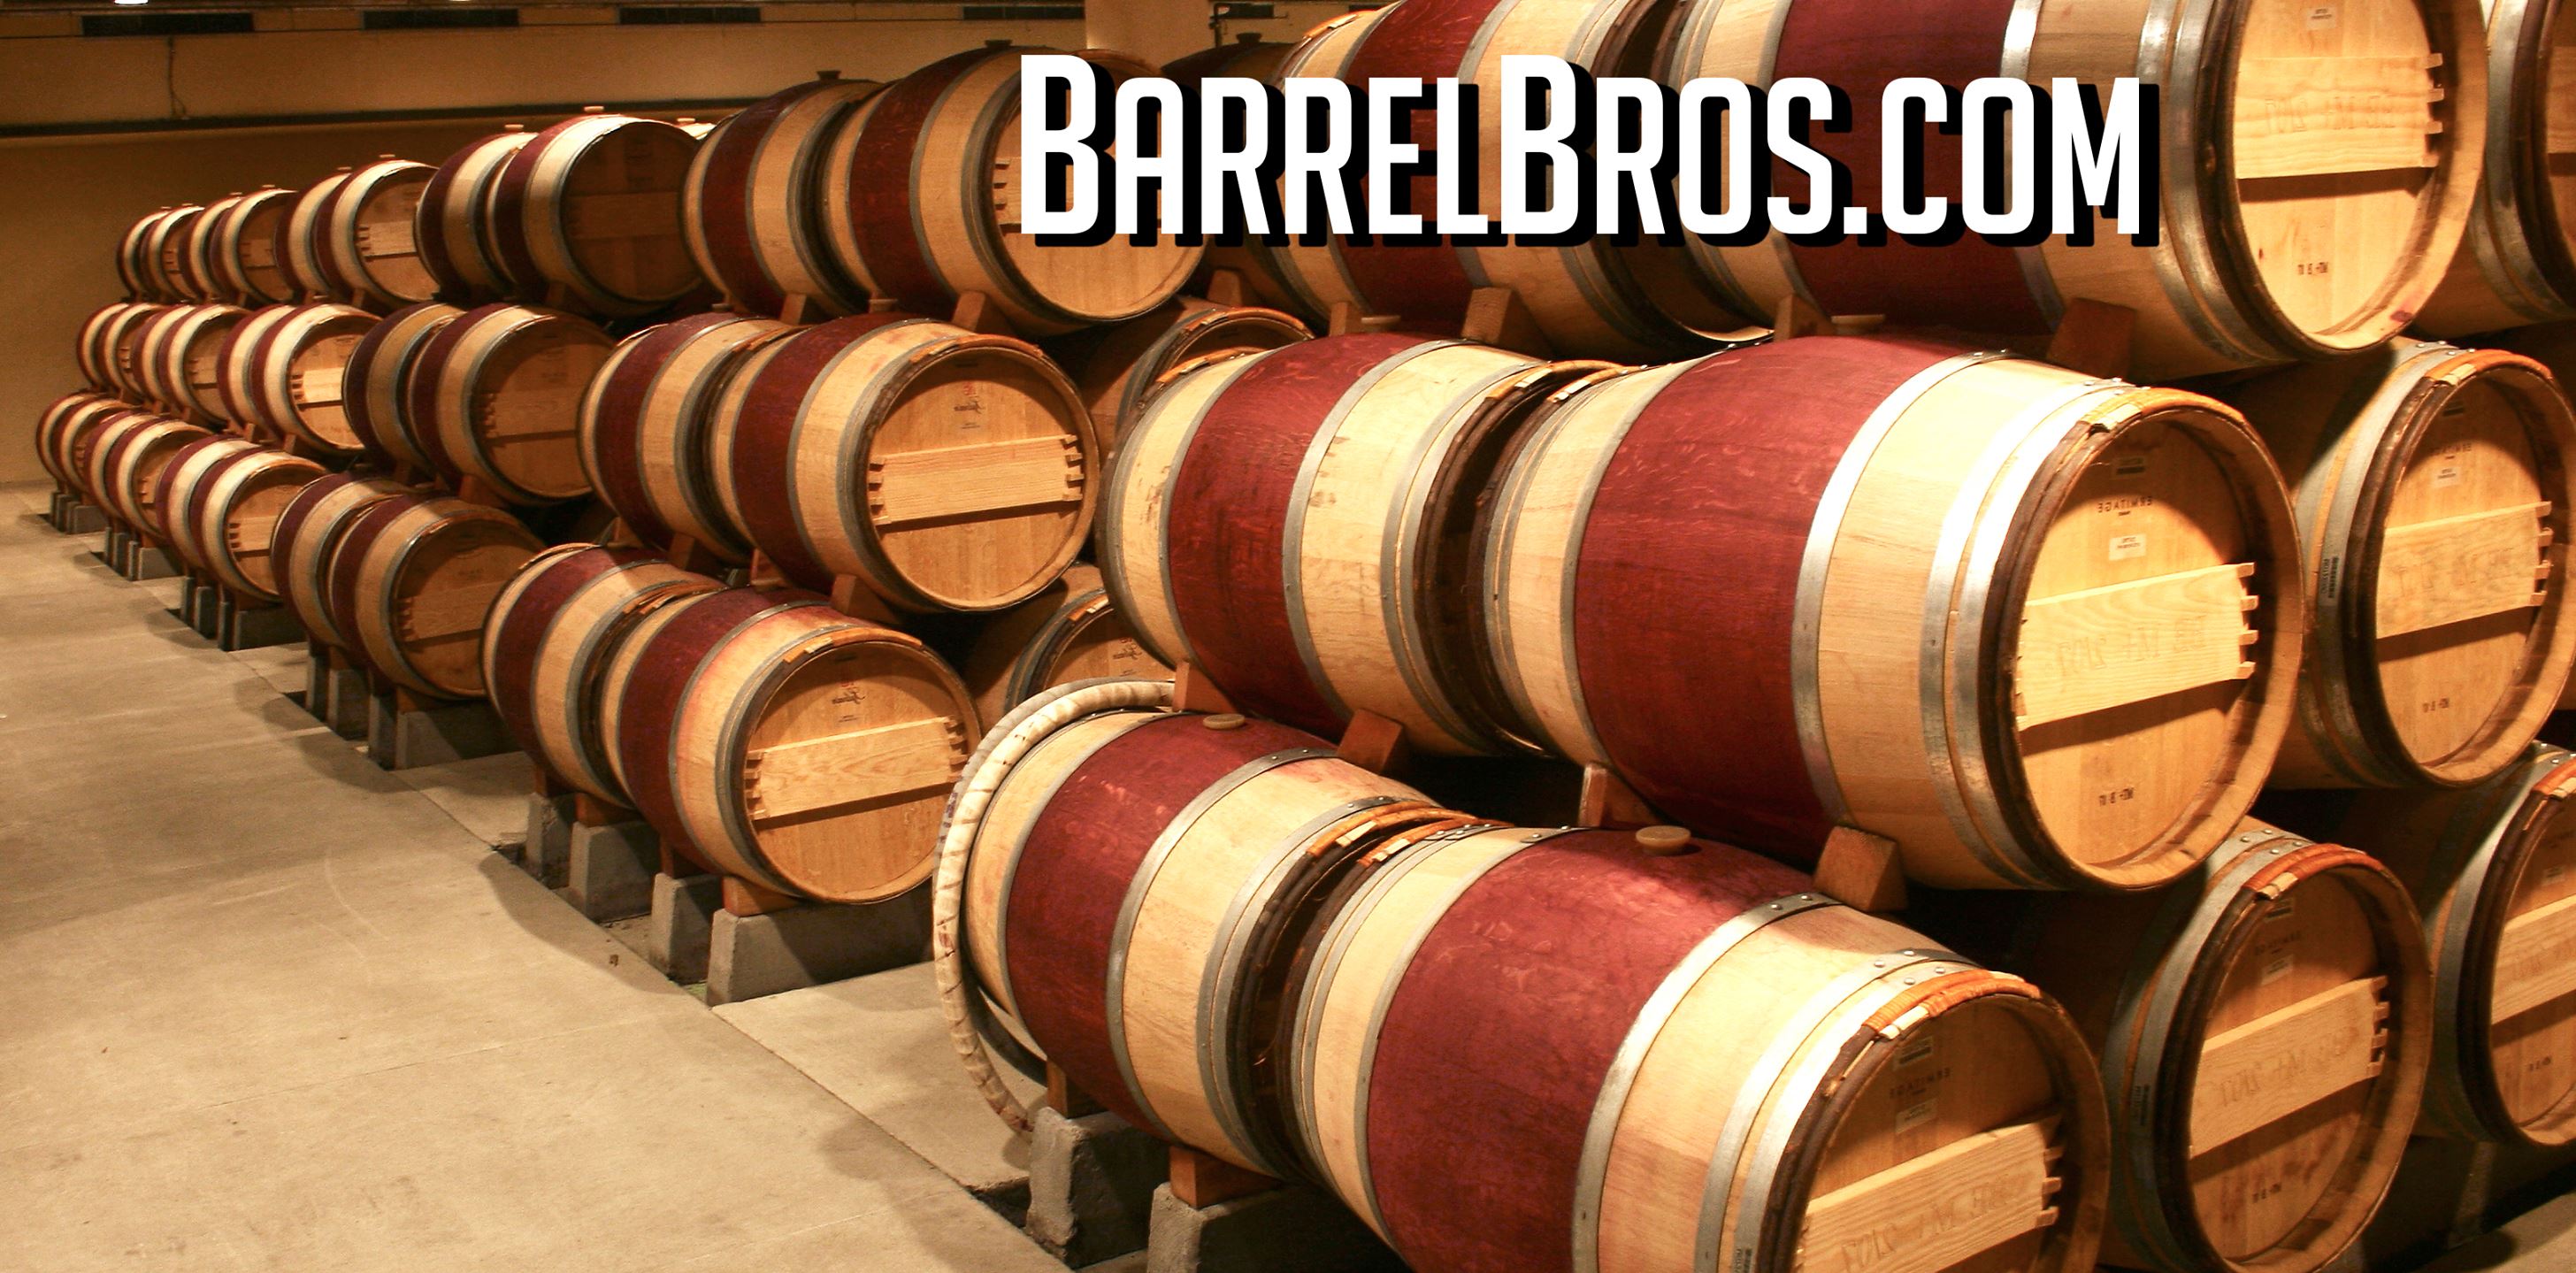 Barrel Brothers Wine & Spirits